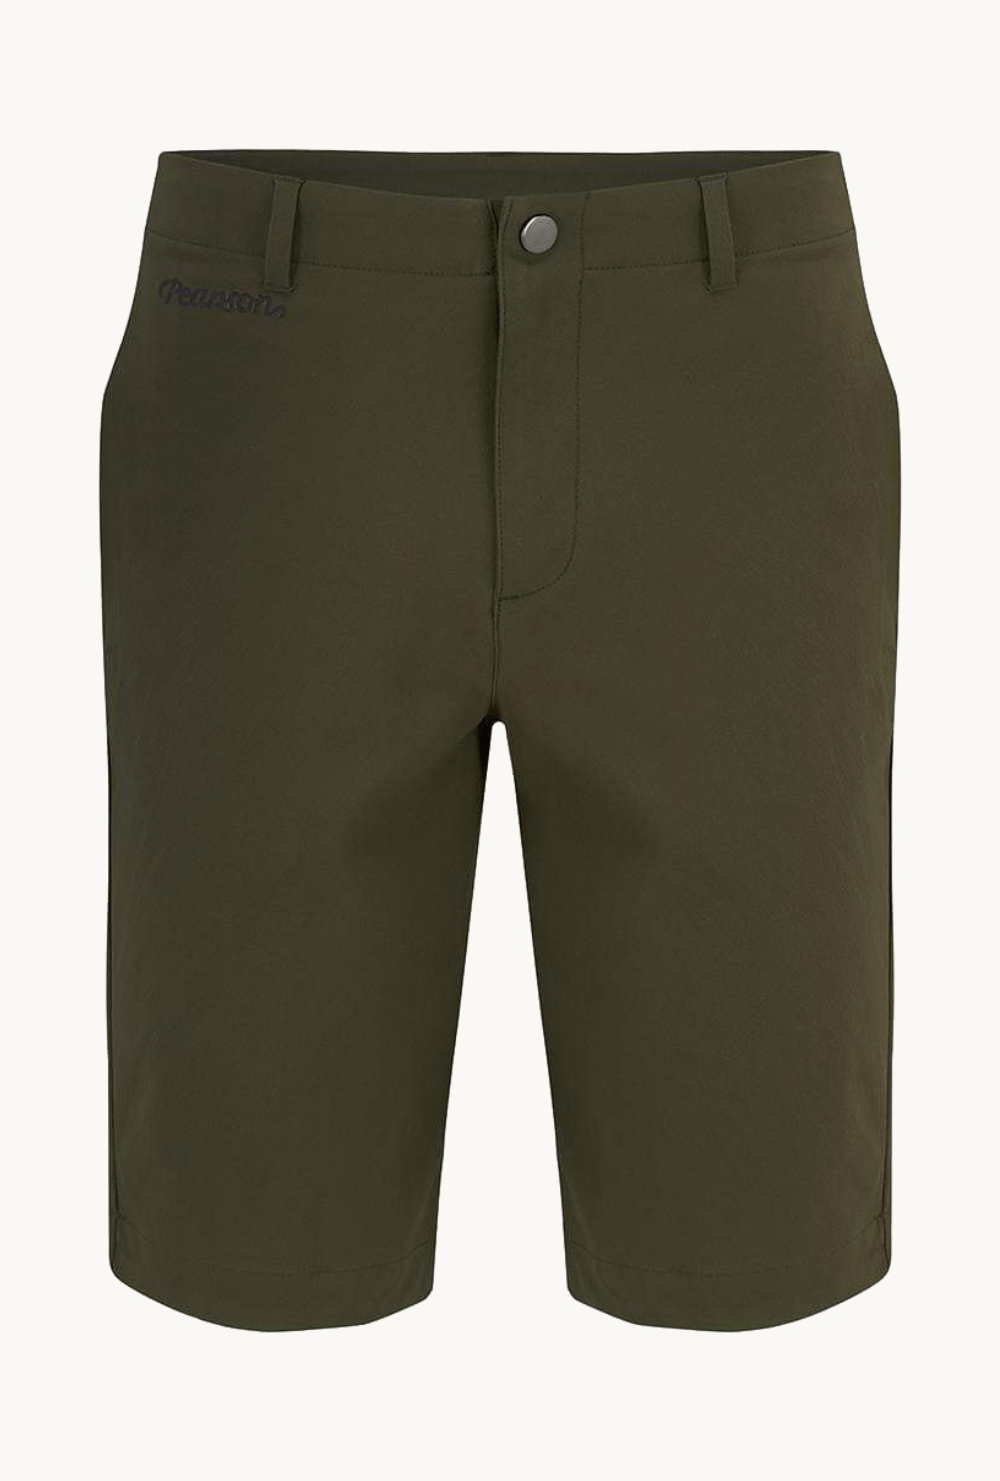 Pearson 1860  Kick Back - Urban Commuter Shorts Olive  Medium 32 / Olive